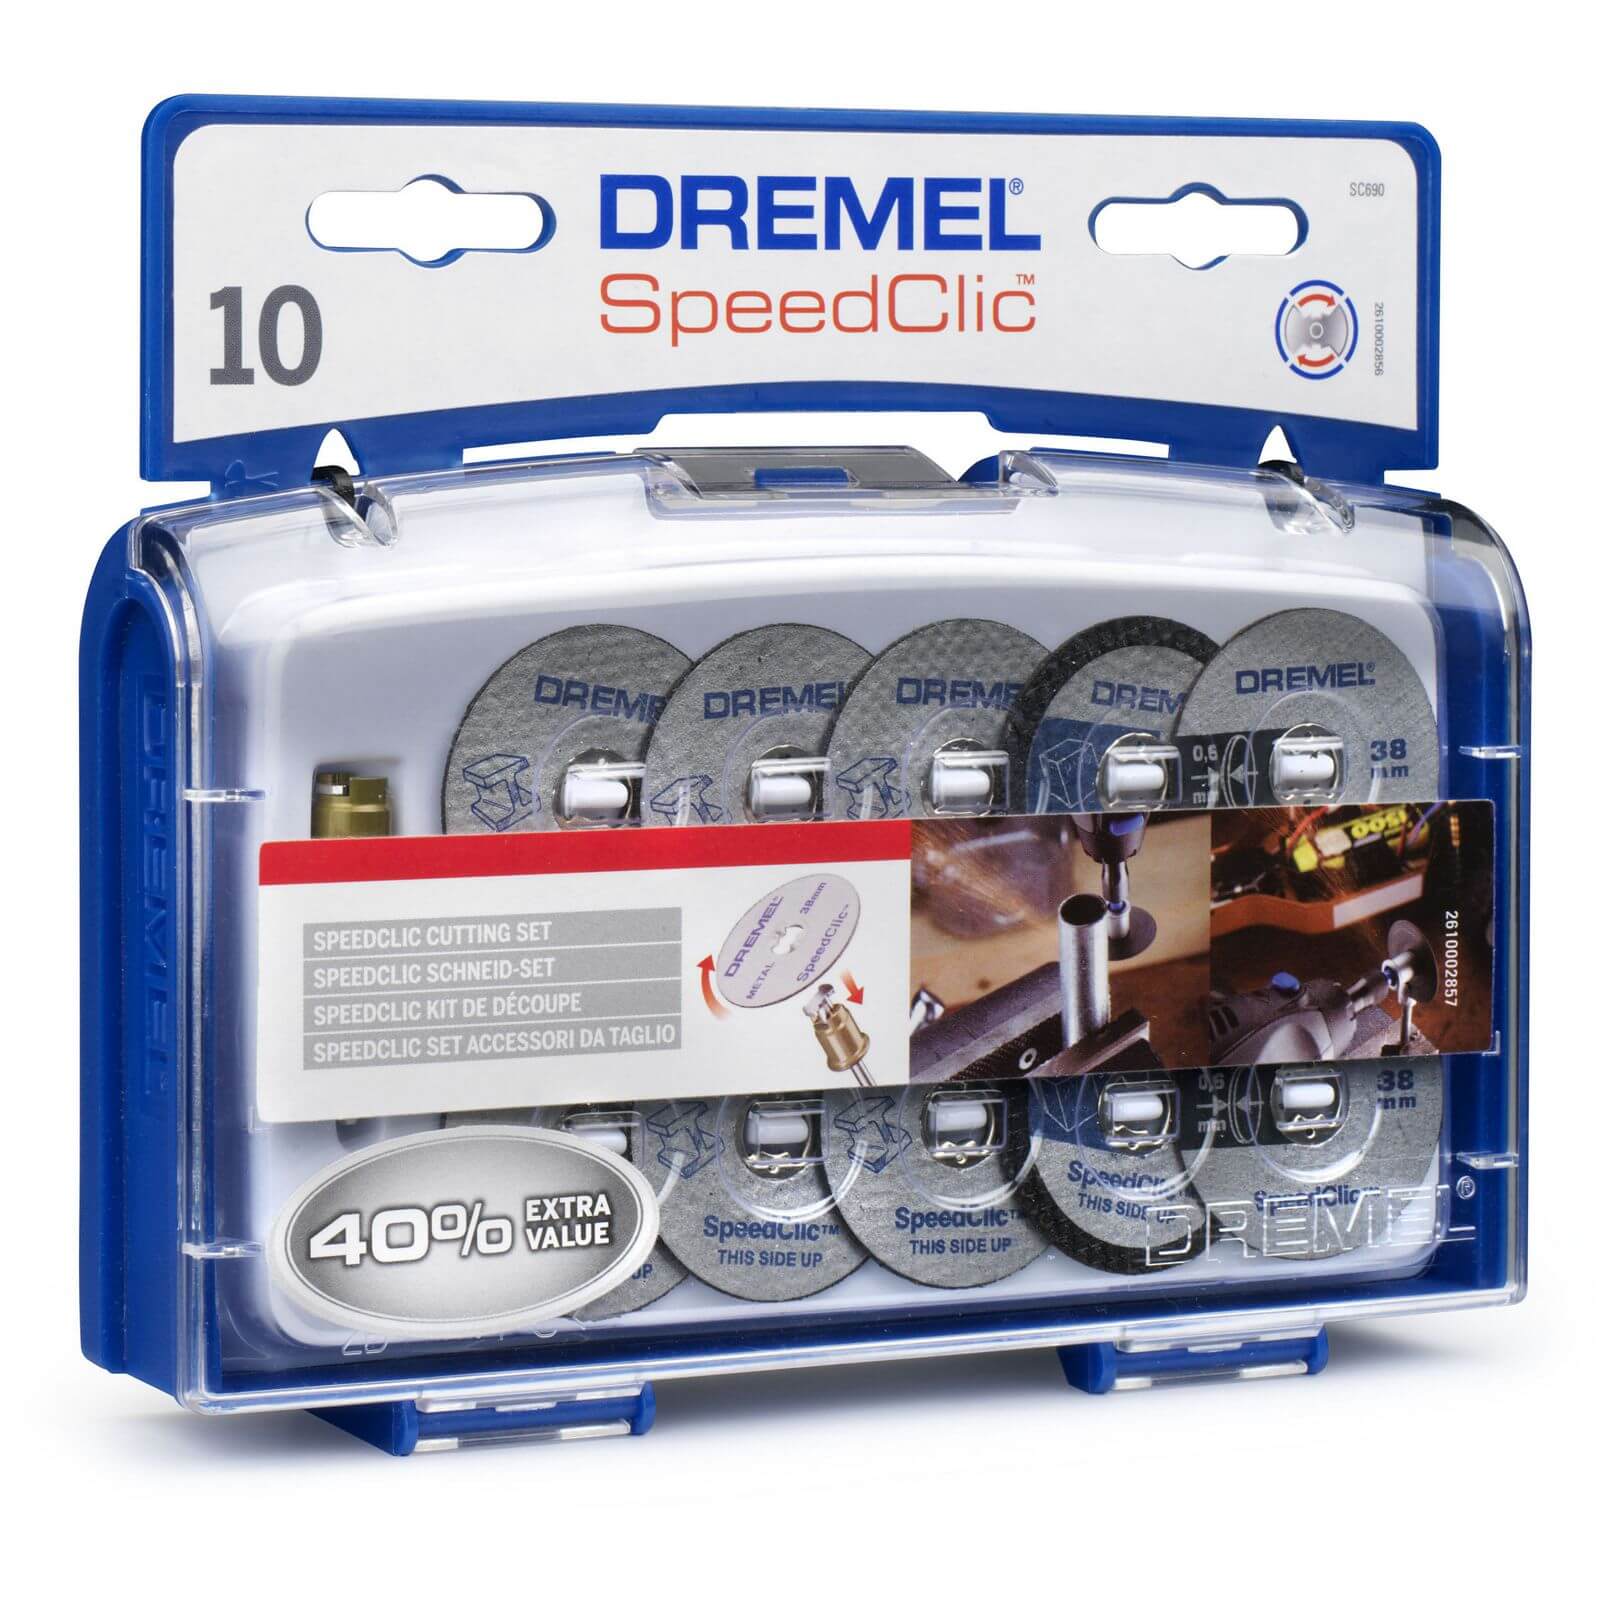 Dremel SpeedClic Cutting Accessory Set